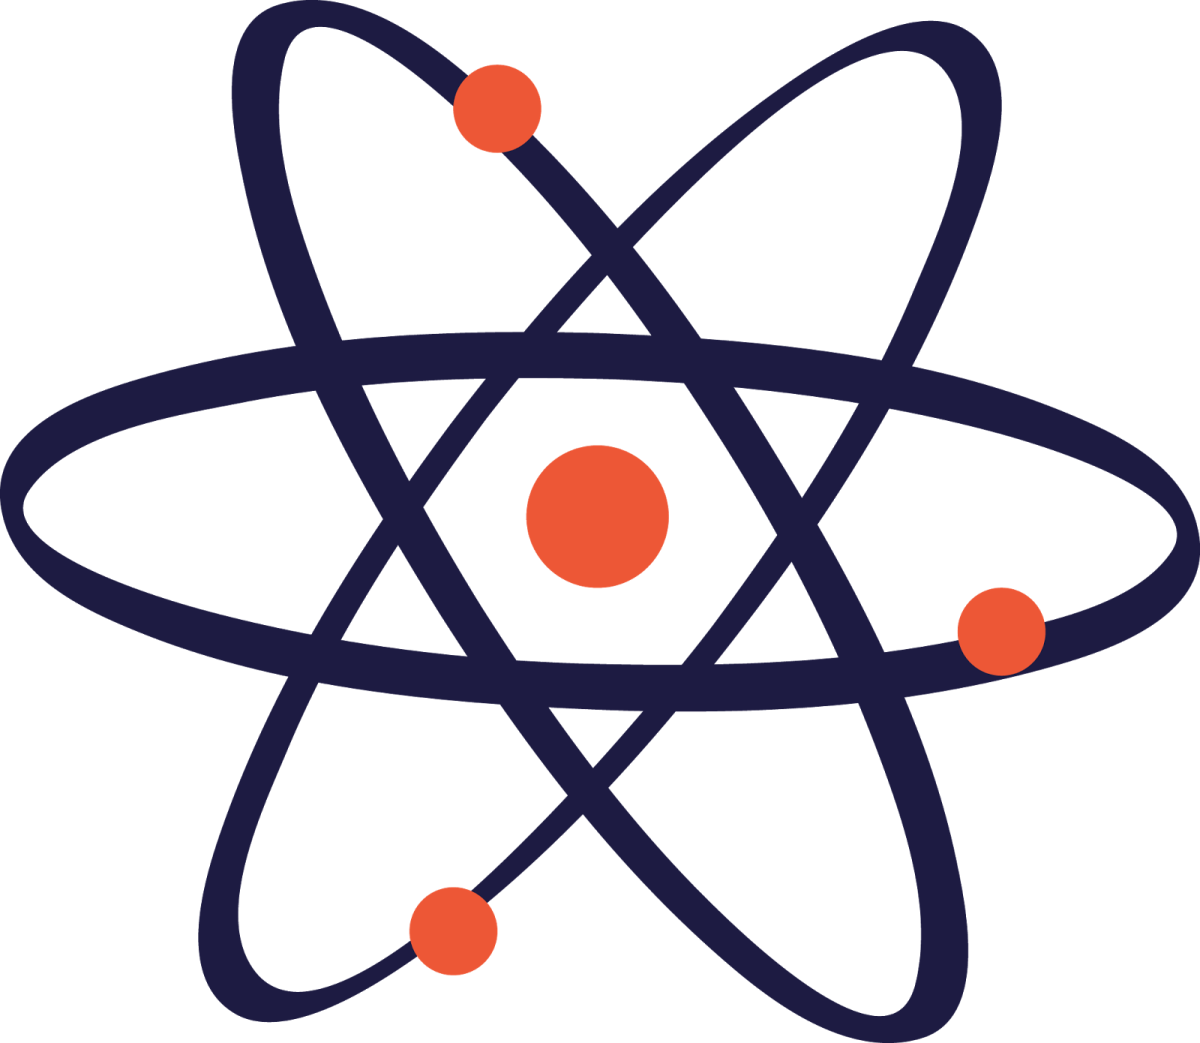 Физика атома. Атом рисунок. Атом без фона. Символ ядерной физики. Символ науки.